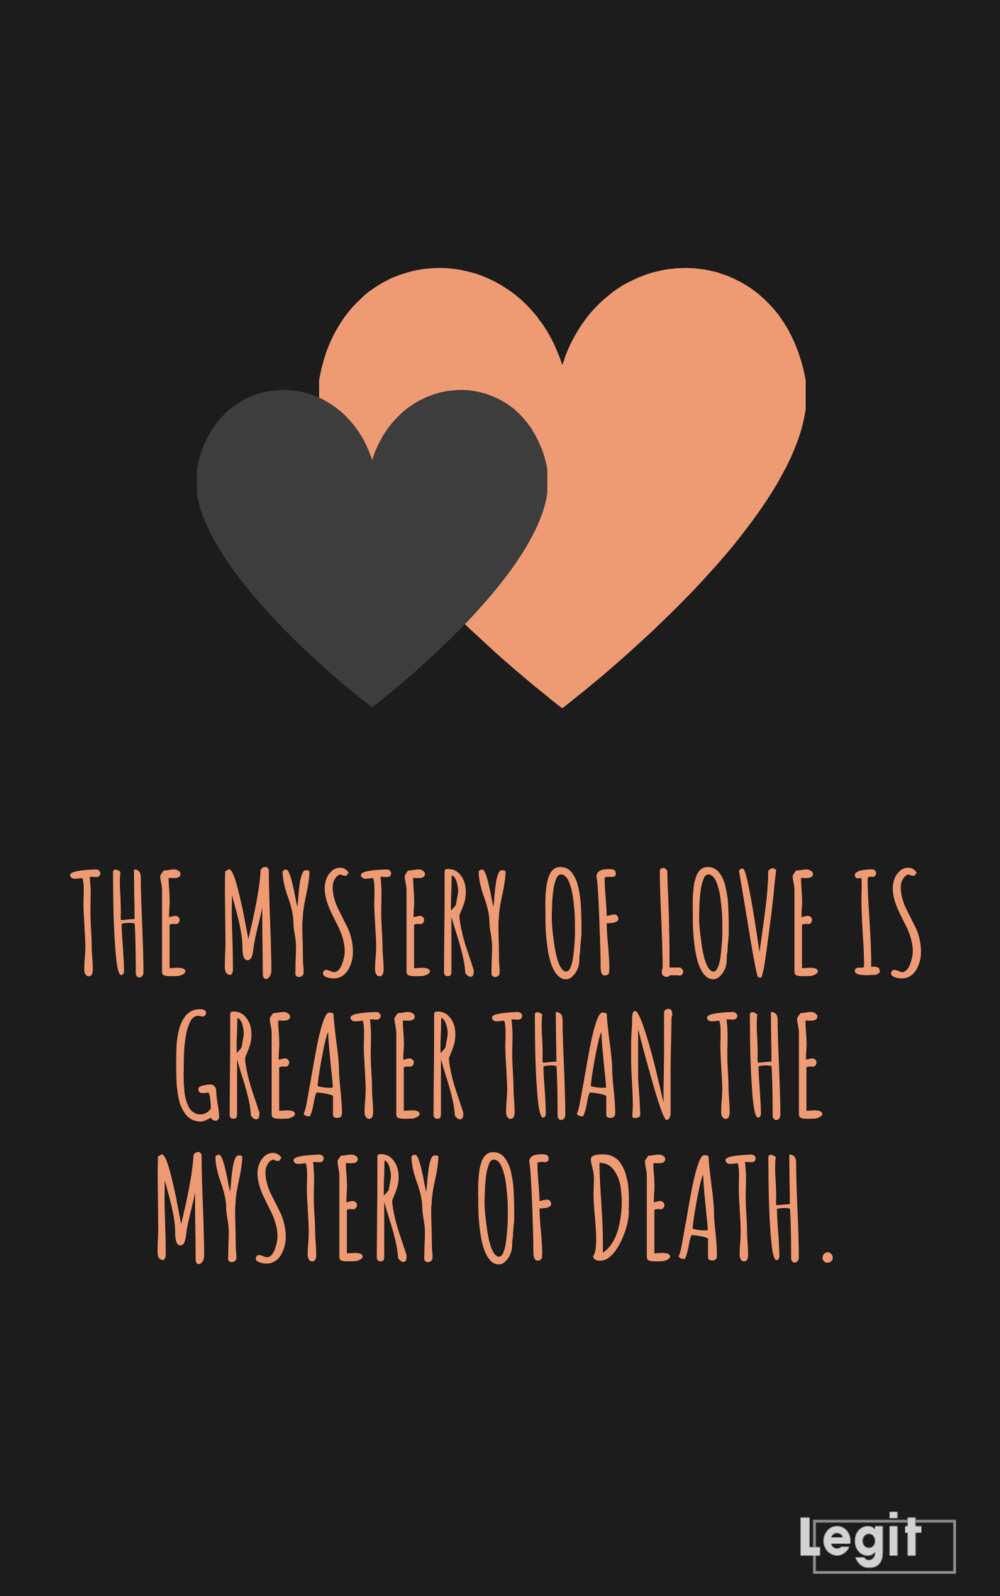 Oscar Wilde quotes on love